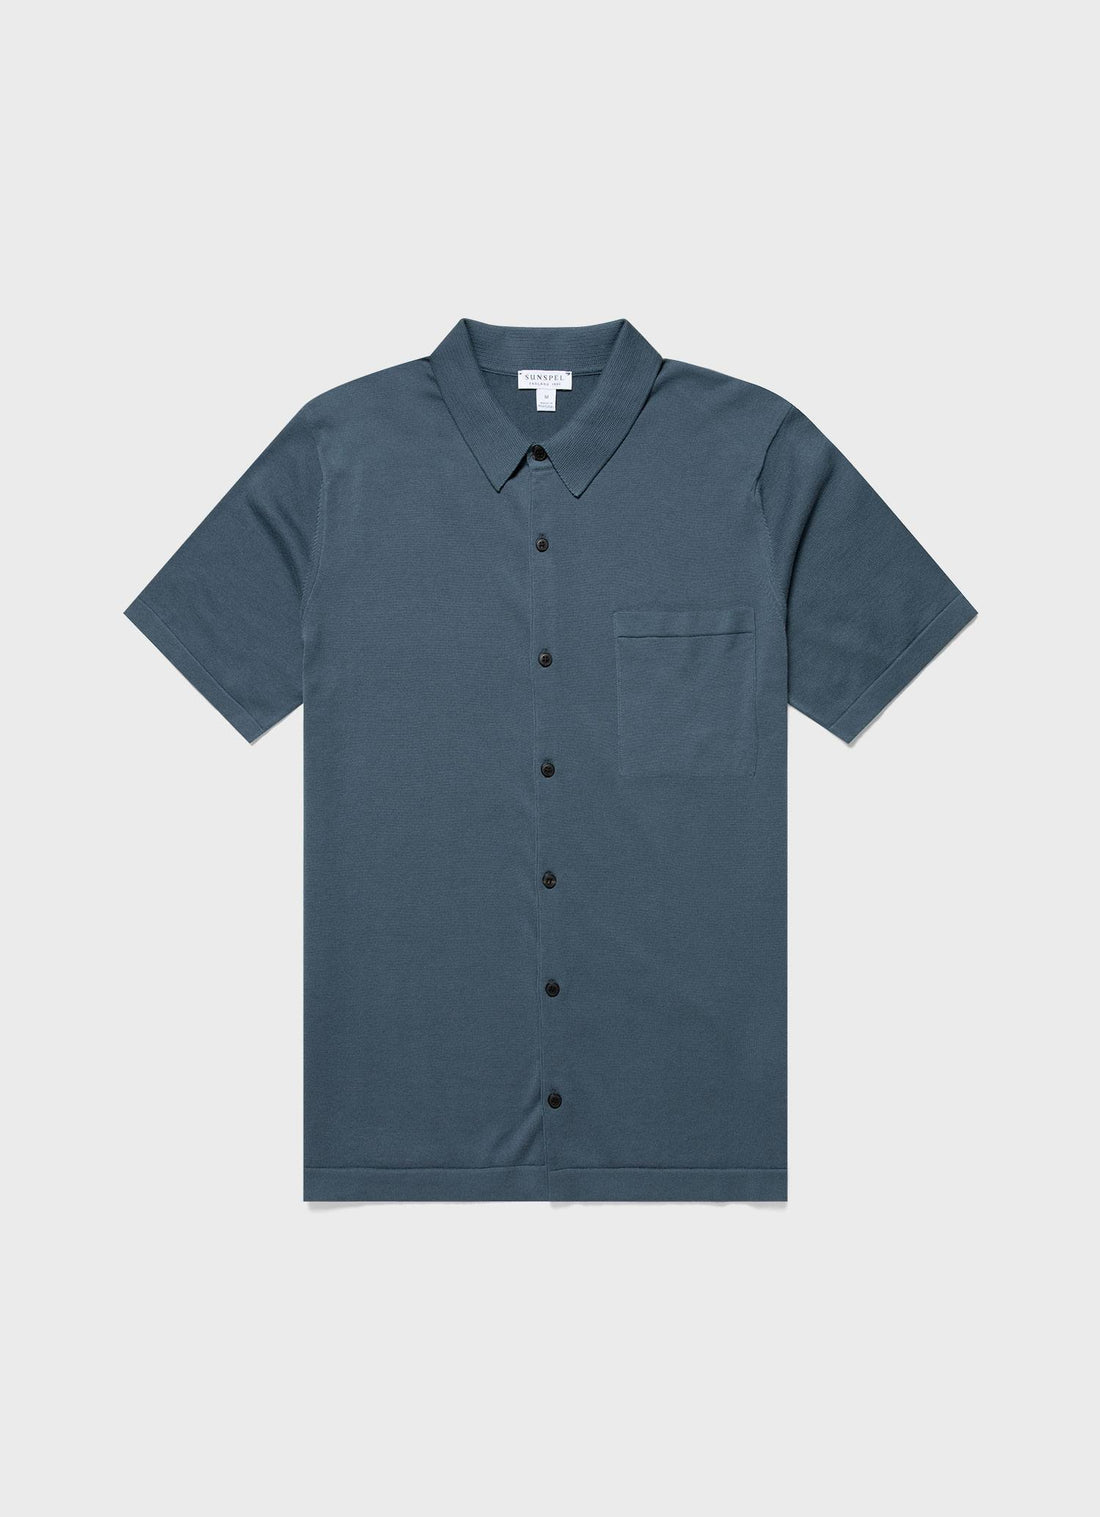 Men's Sea Island Cotton Knit Shirt in Dark Petrol